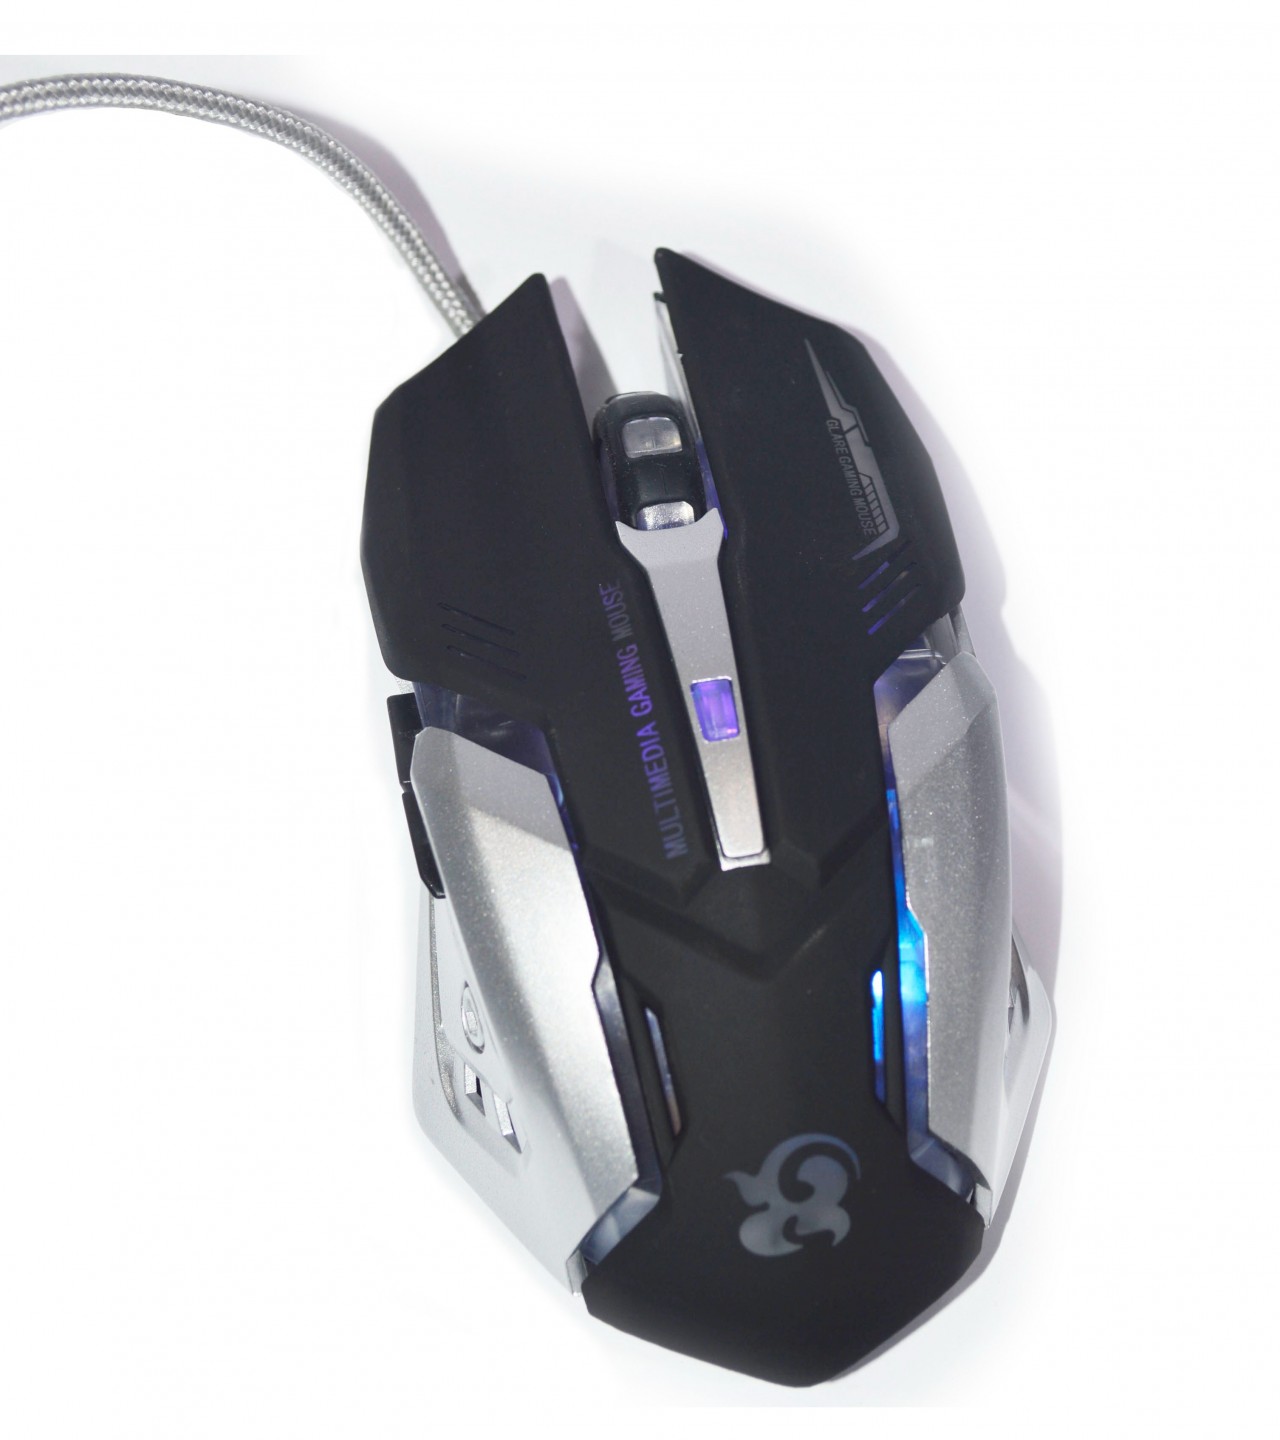 Mouse Optical Gaming C25 USB port Led light color